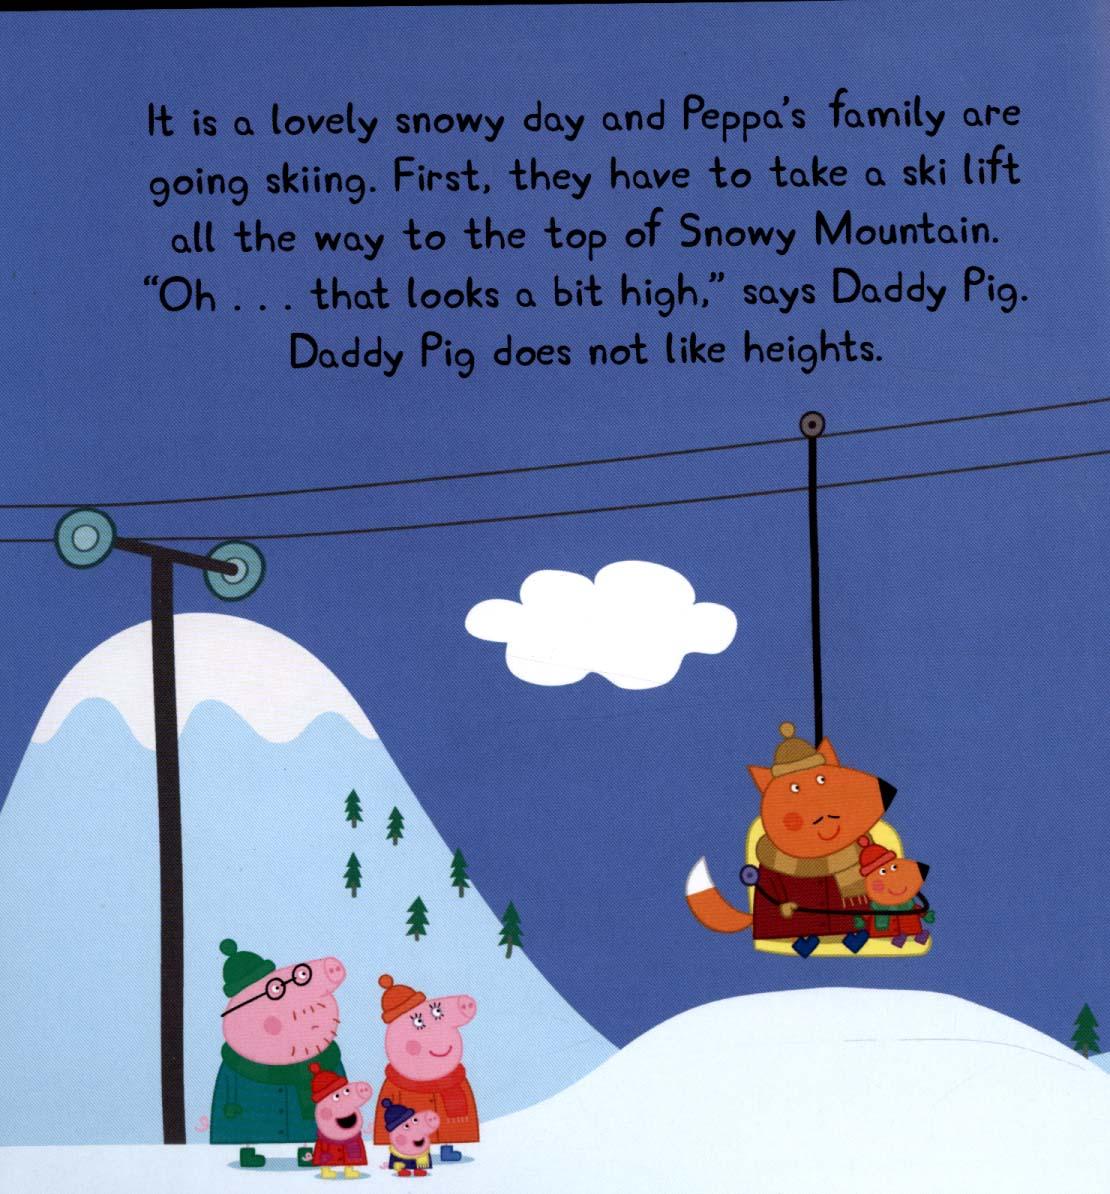 Peppa Pig: Peppa Goes Skiing